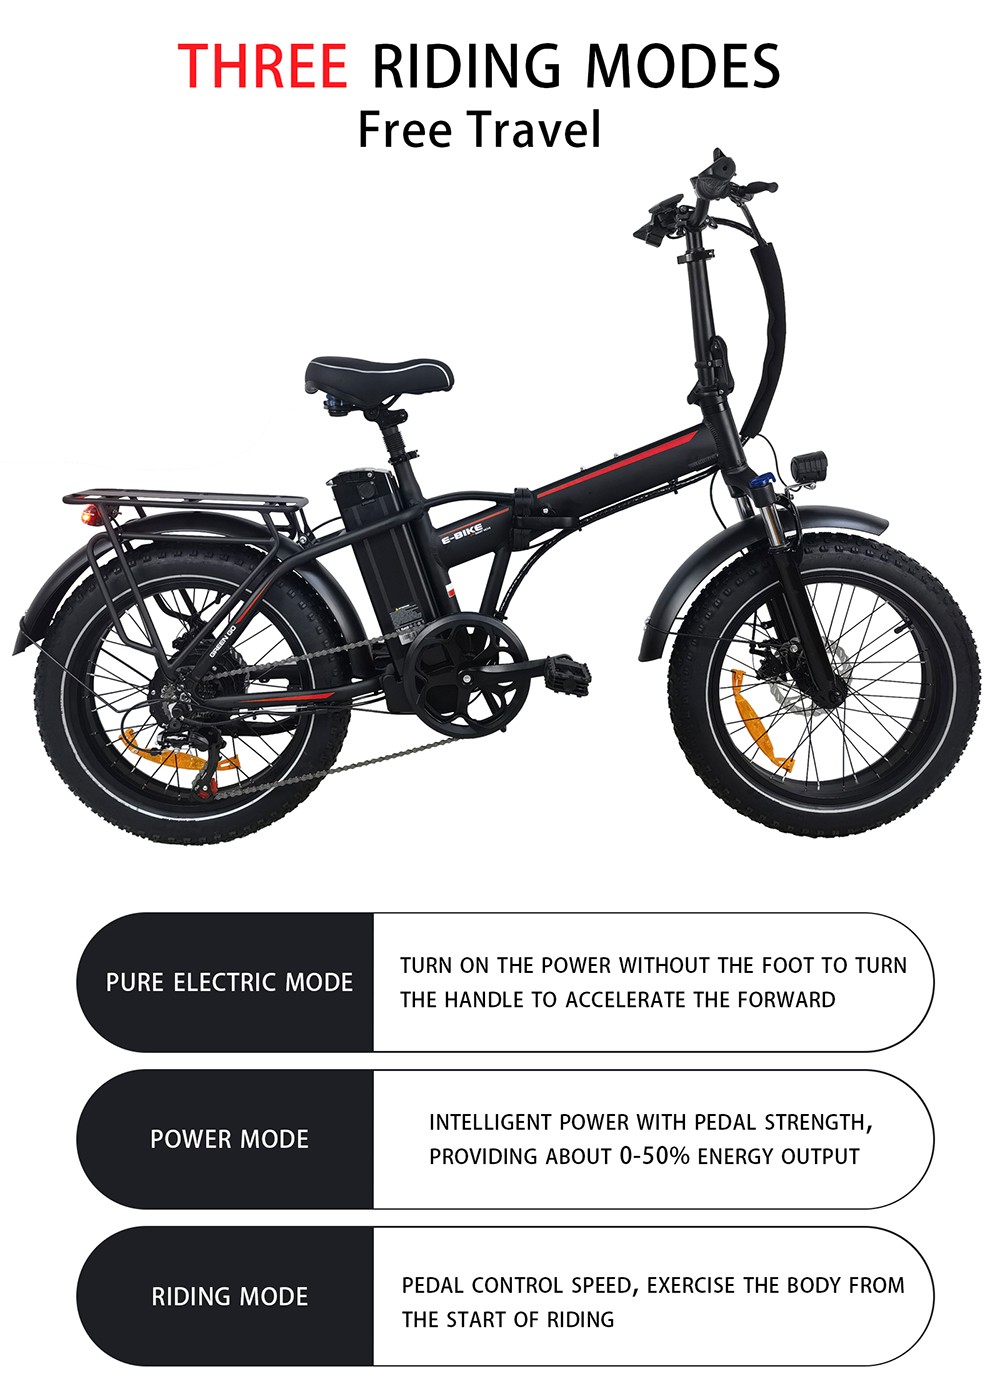 BAOLUJIE DZ2031 Bicicleta eléctrica, motor de 500 W, batería de 48 V 13 Ah, neumático de 20 * 4.0 pulgadas, alcance de 35-45 km, velocidad máxima de 40 km/h, freno de disco mecánico SHIMANO de 7 velocidades, negro